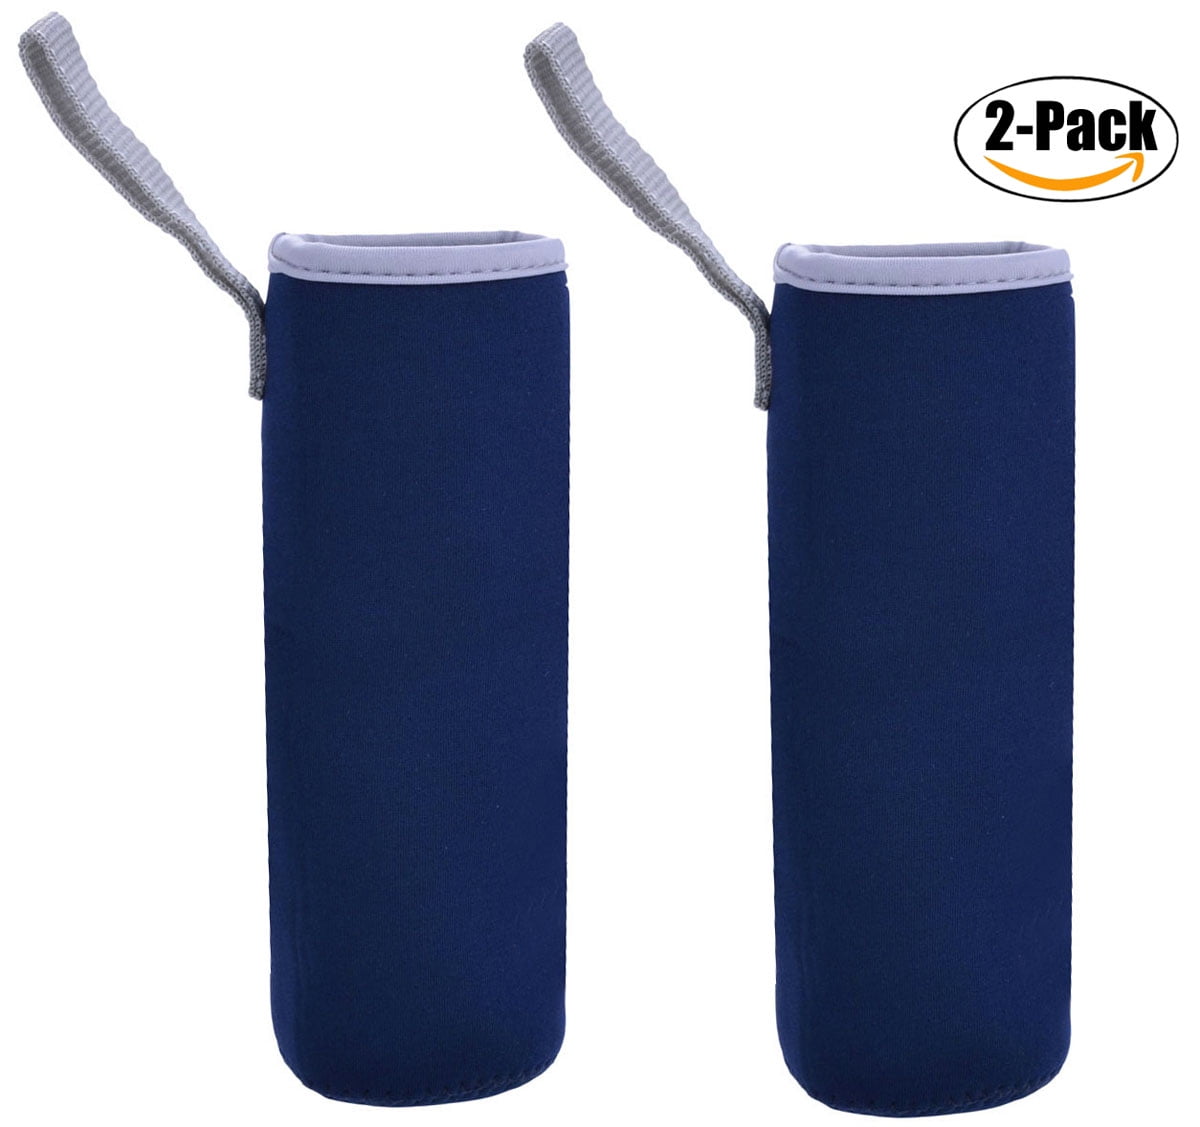 Insulated Neoprene Glass Water Bottle Holder with Adjustable Shoulder Strap  for Walking, Silicone BLACK Brush (Blue Waves Design)